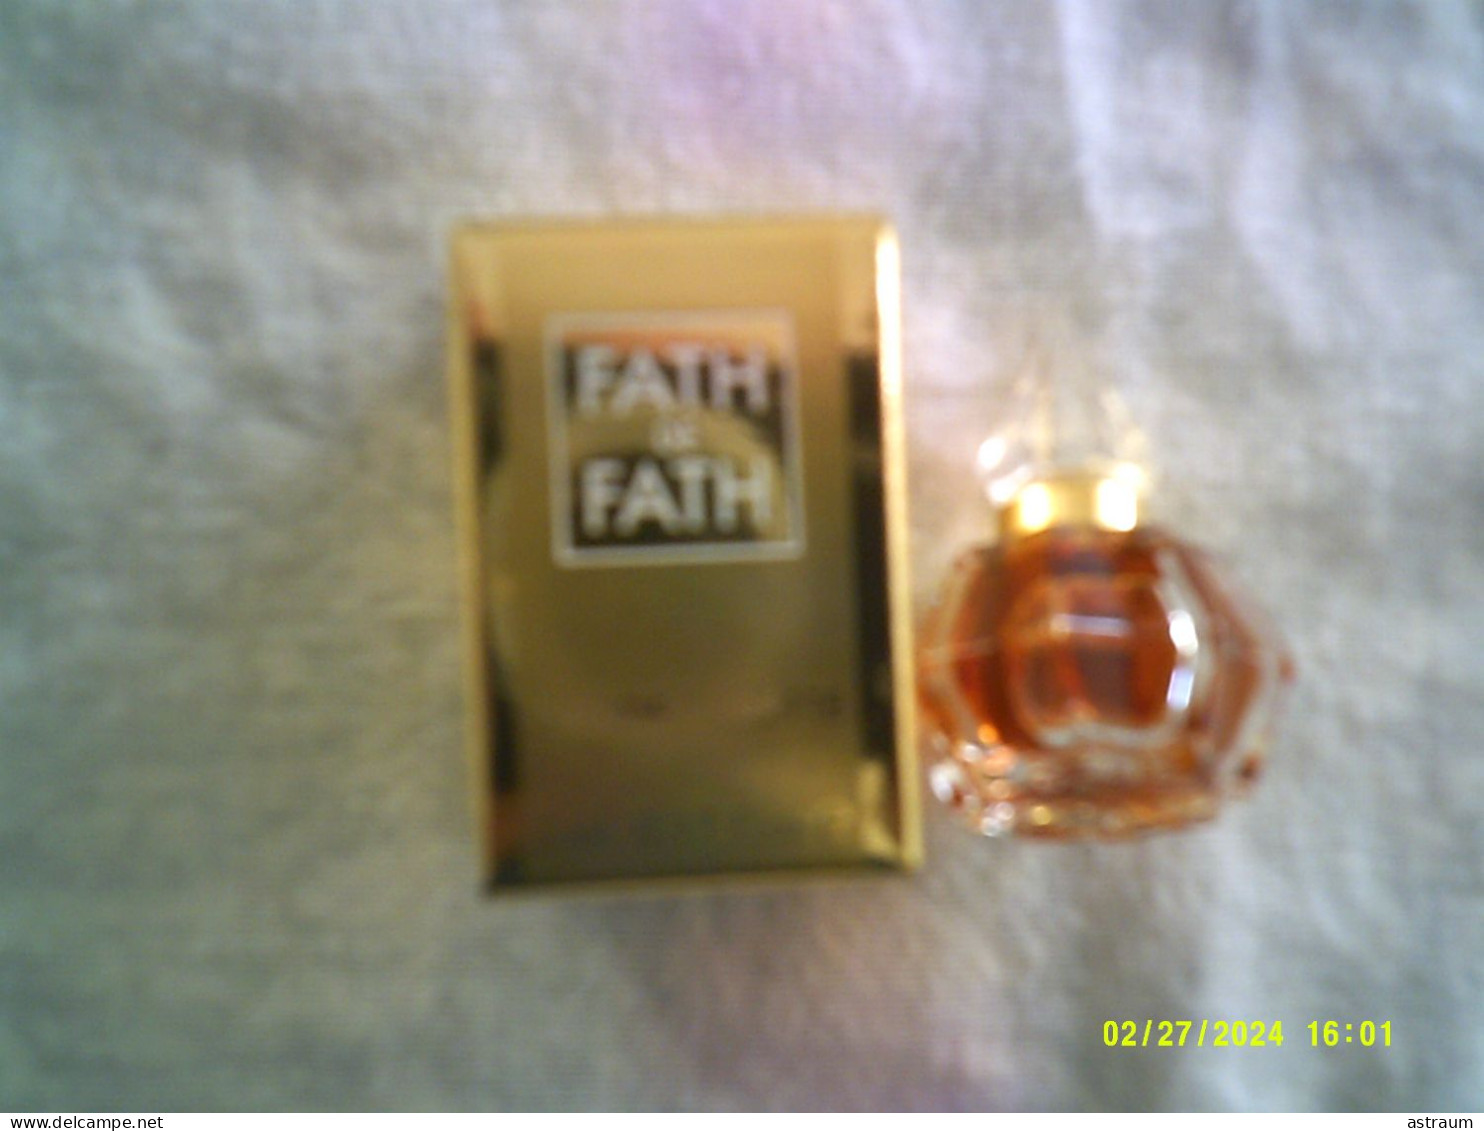 Miniature Ancienne Parfum - Fath De Fath - EDT - Pleine Avec Boite 5ml - Miniaturen Flesjes Dame (met Doos)